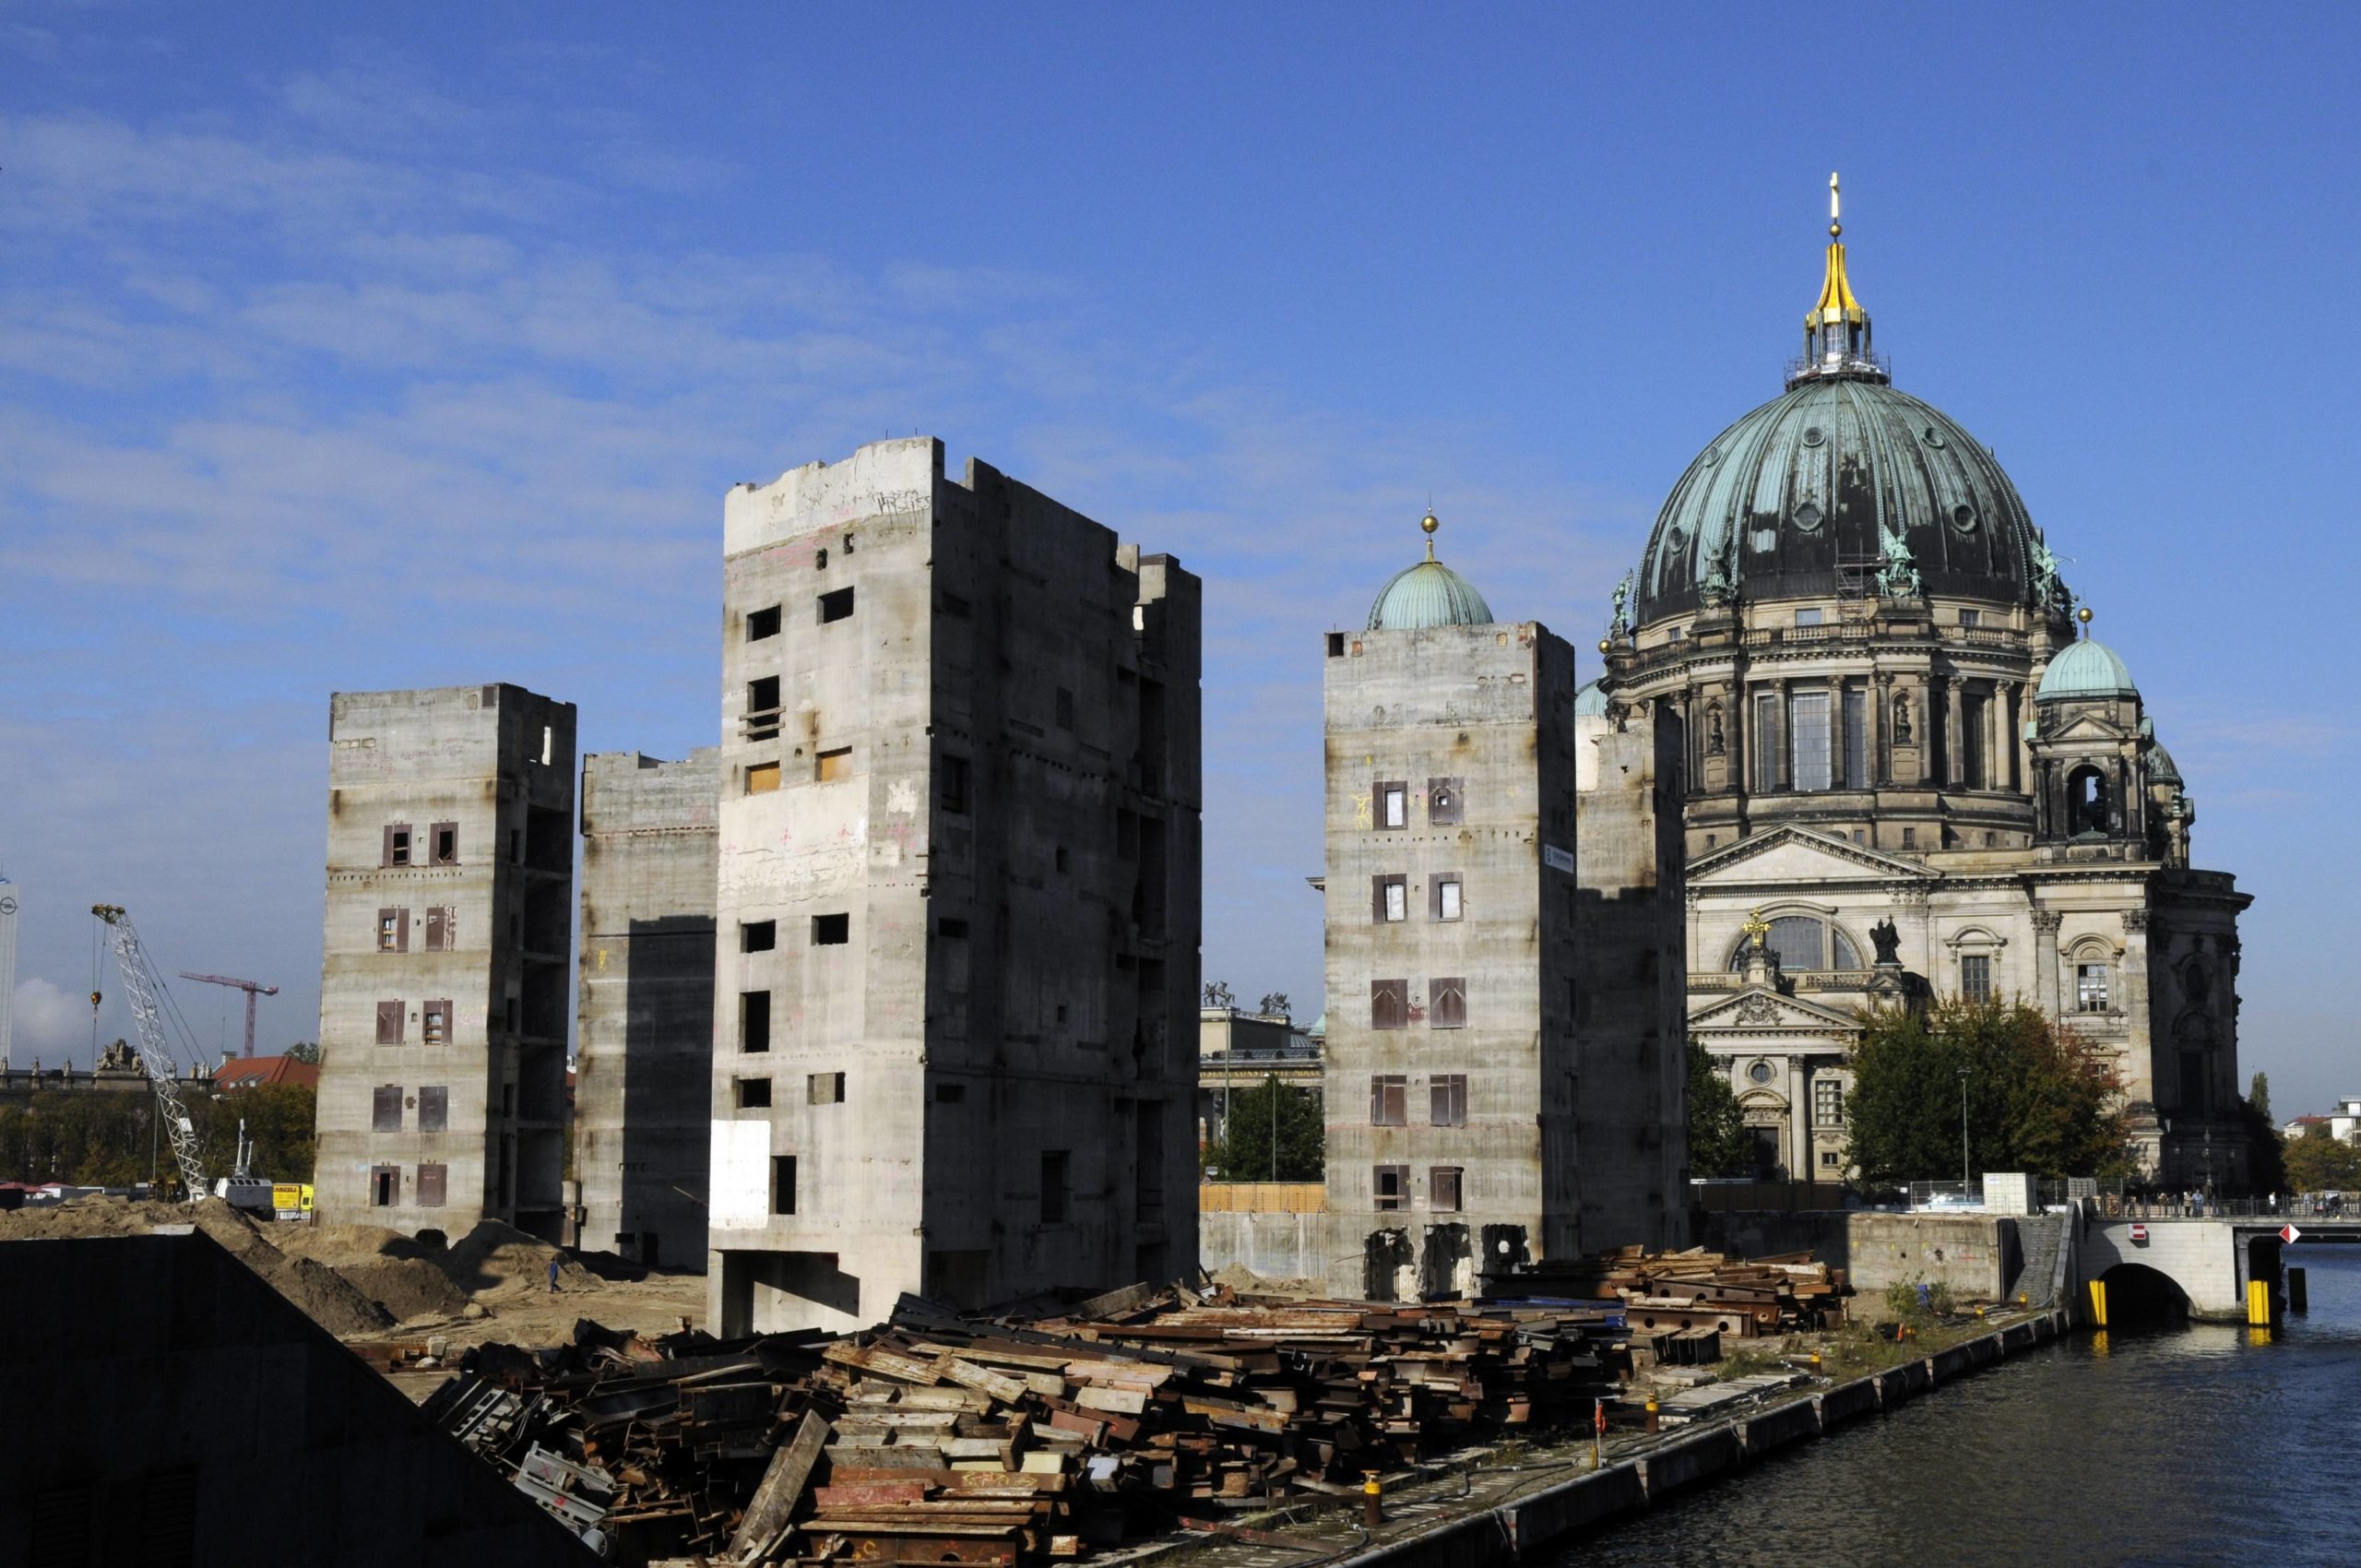 Rückbau von Palast der Republik, dahinter der Berliner Dom, 2008. Foto: Imago/Bernd Friedel